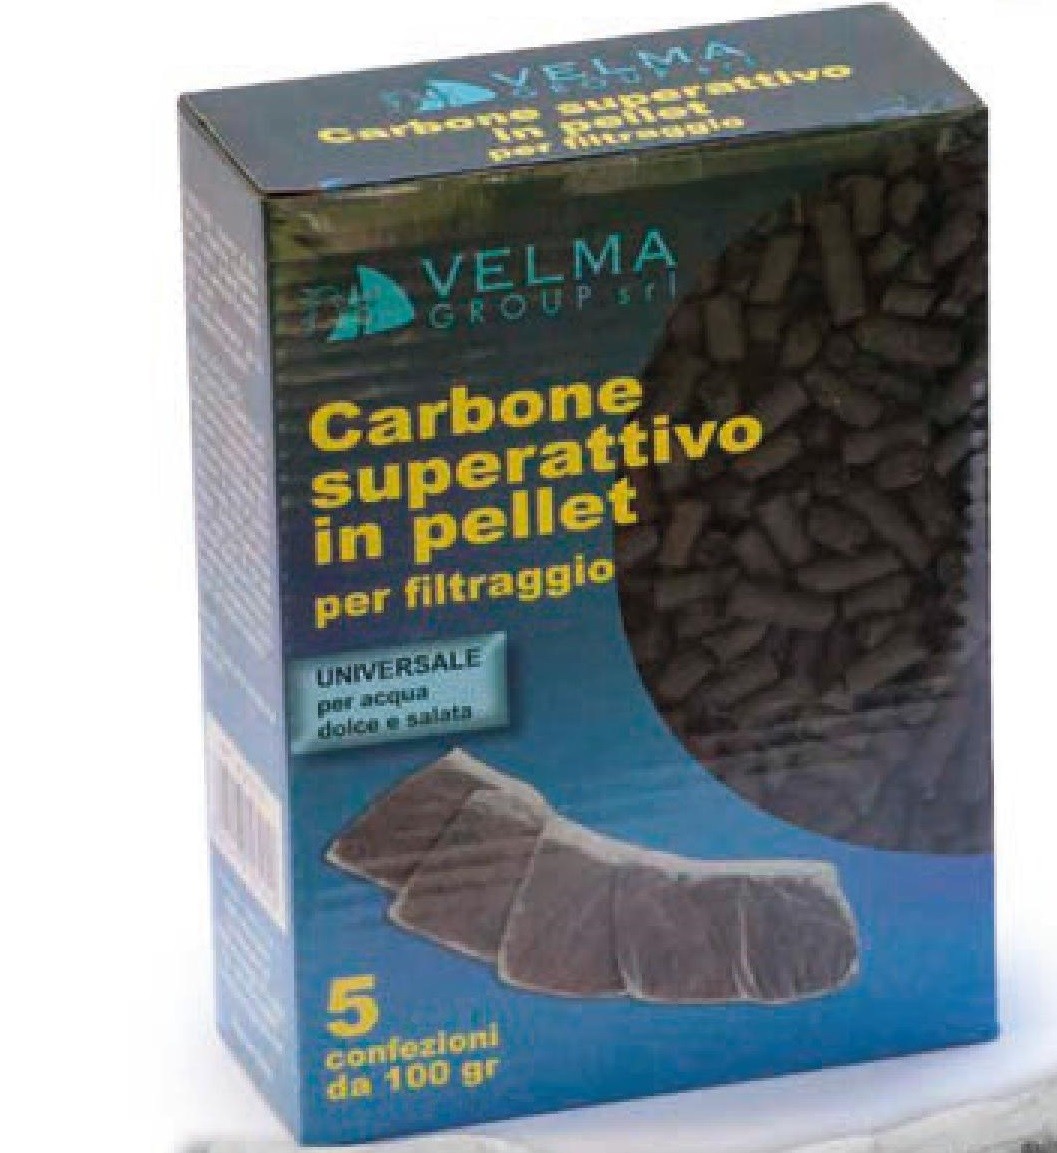 Velma Carbone attivo 5 sacchetti da 100g